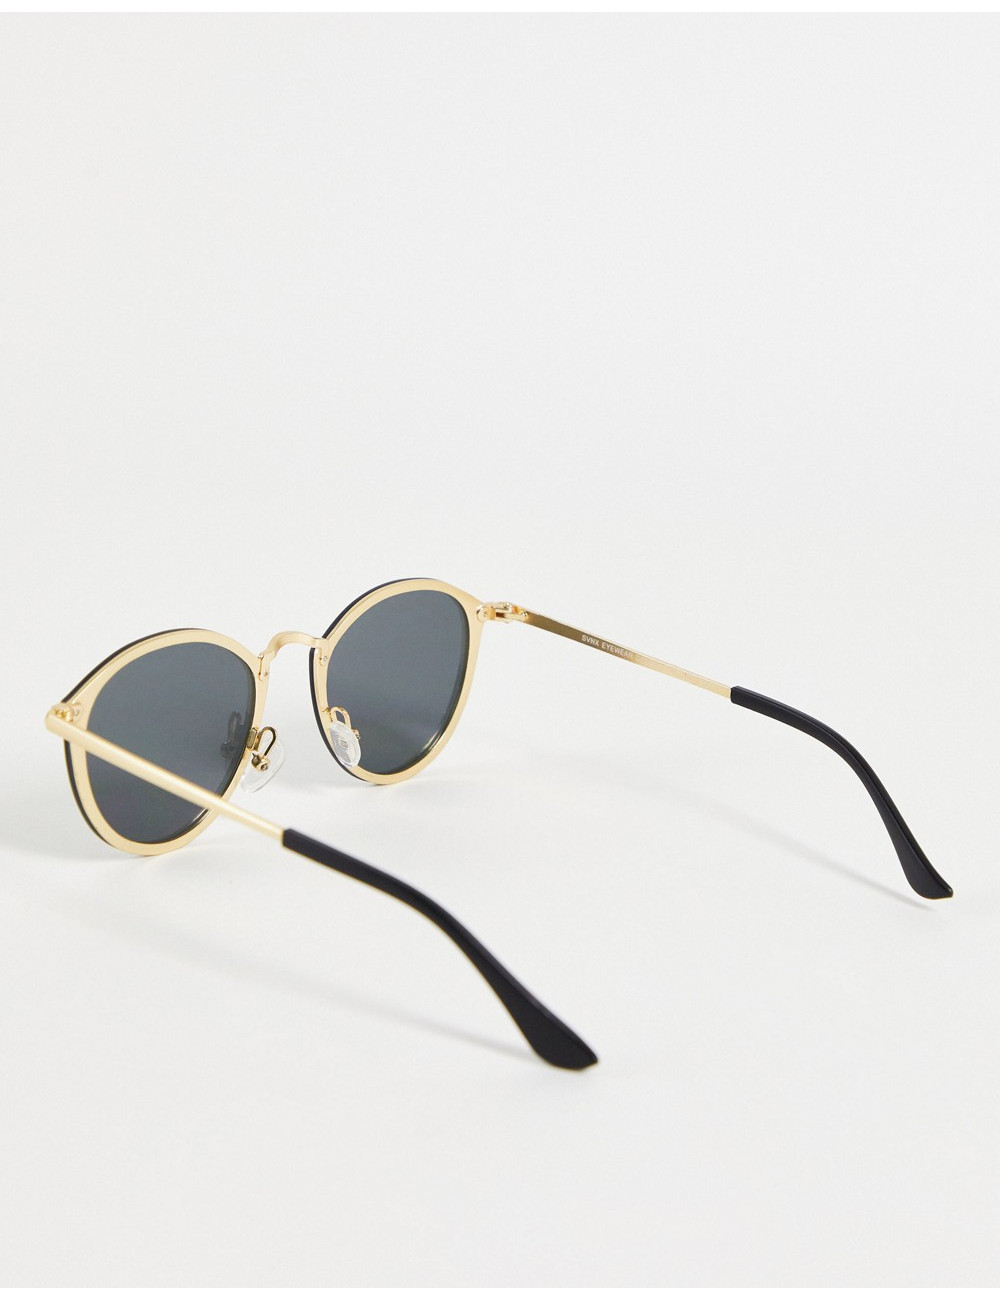 SVNX round sunglasses